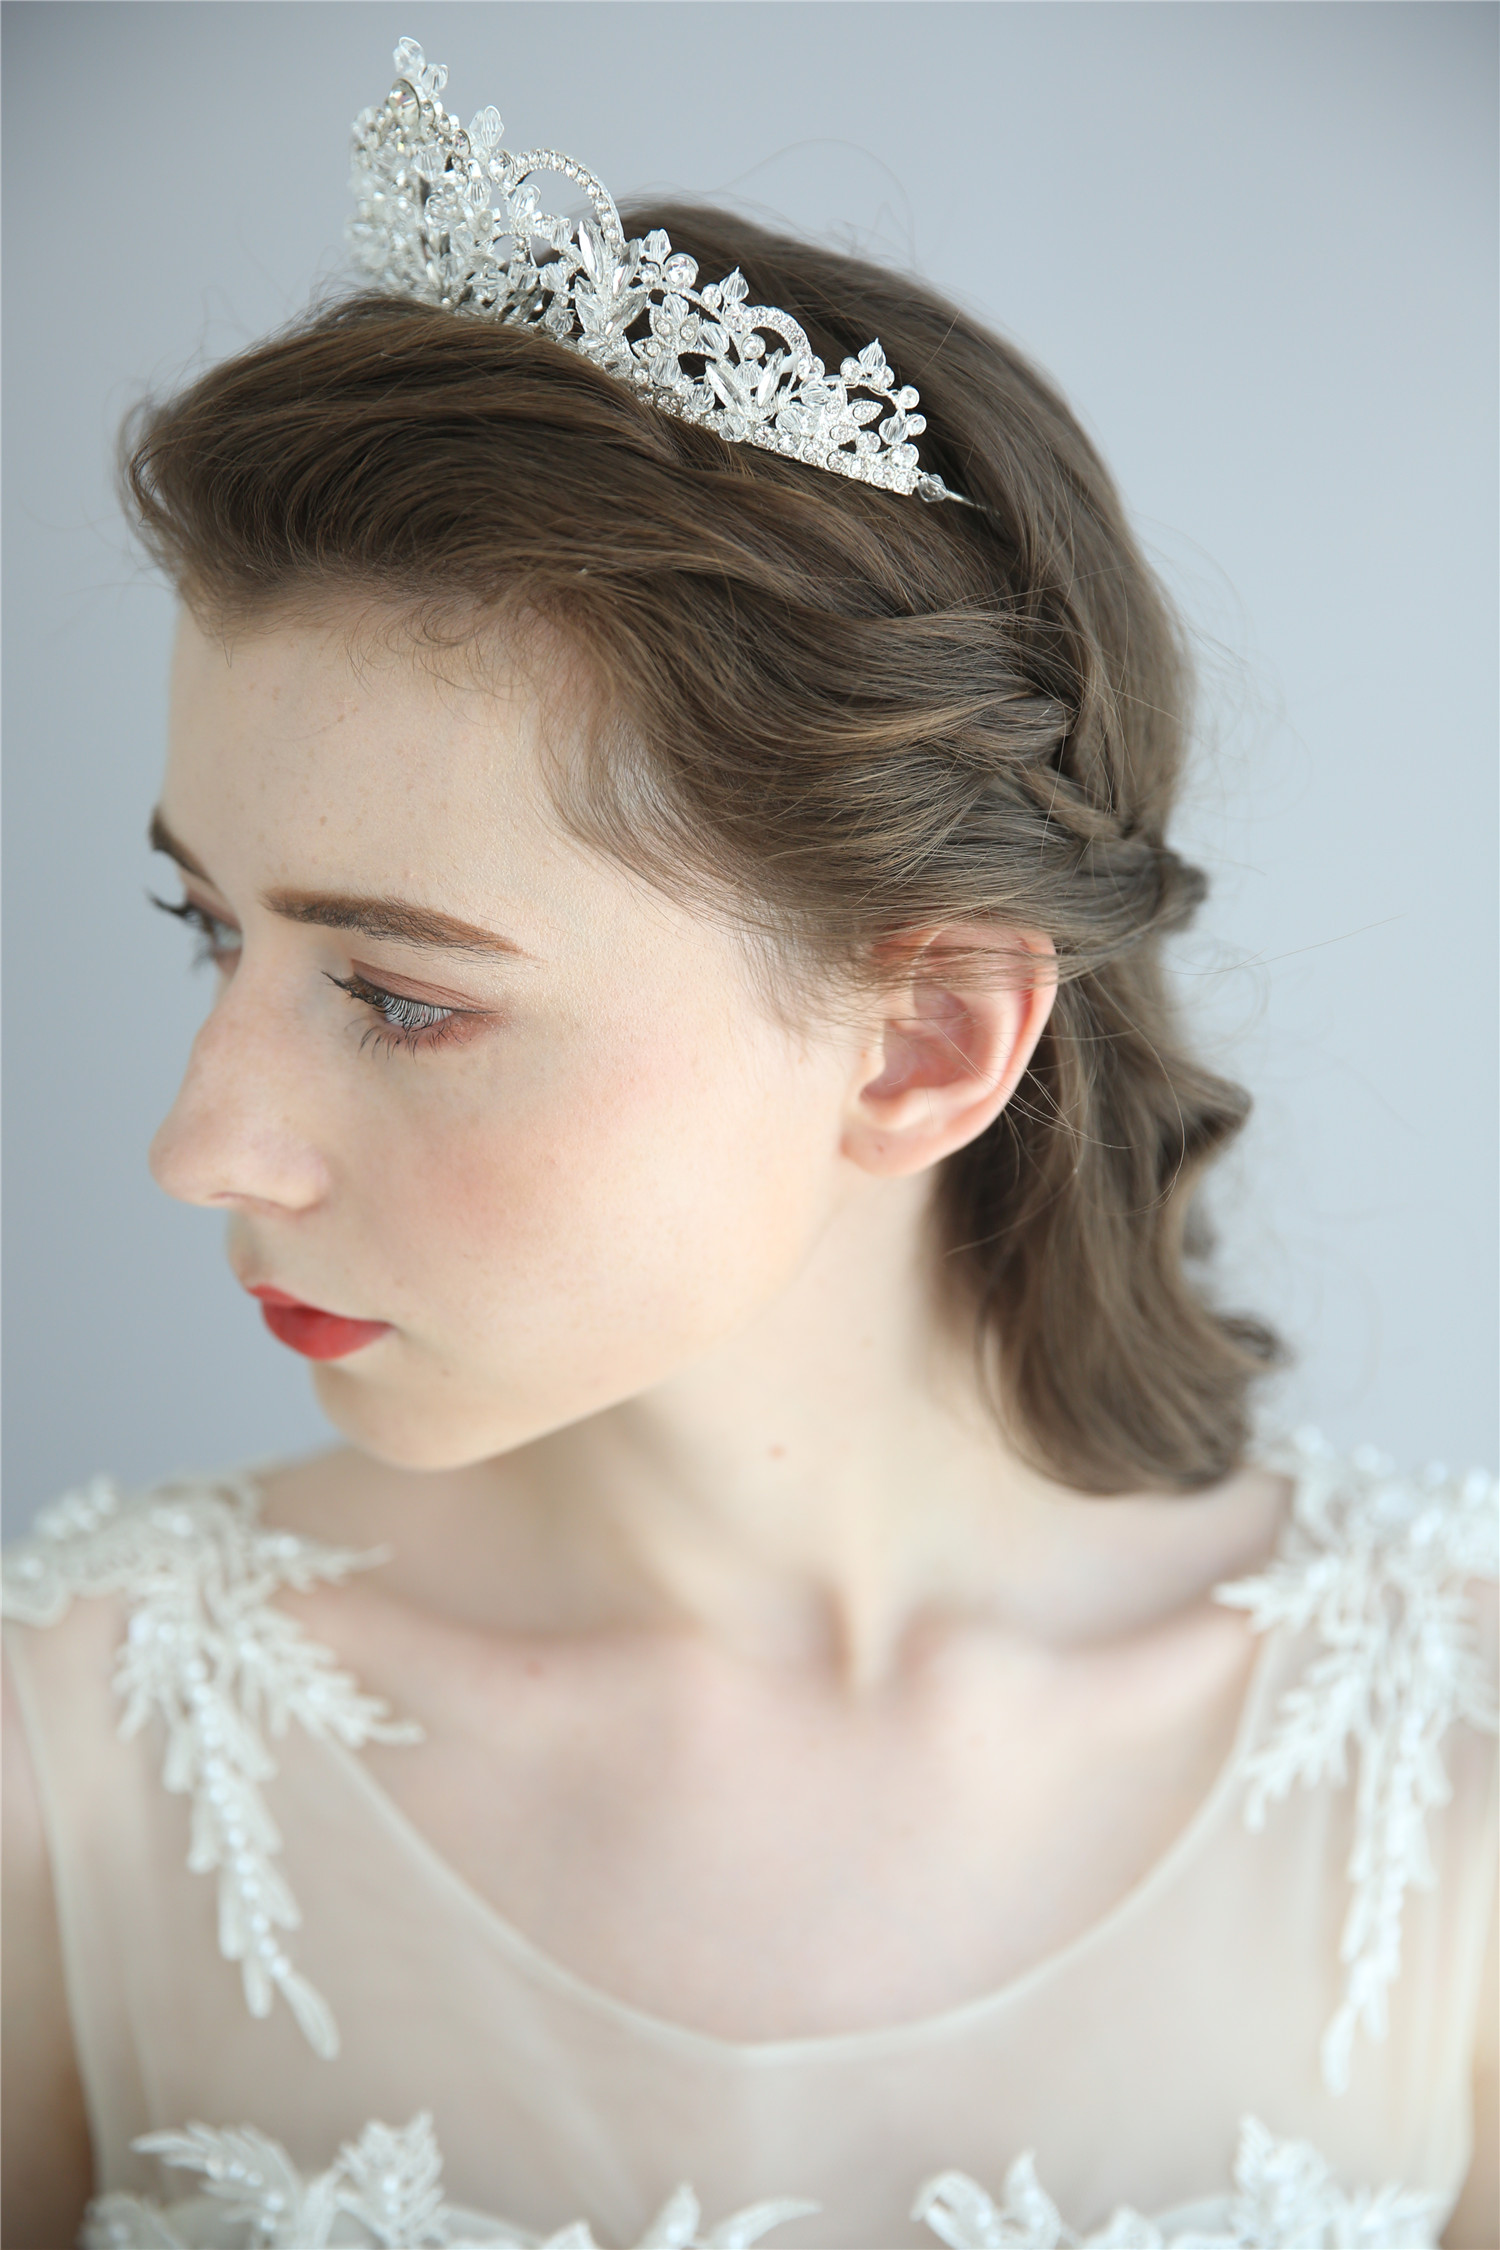 Fashion Silver Crystal Flower Hair Jewelry Accessories Handmade Wedding Headdress Tiaras Crowns